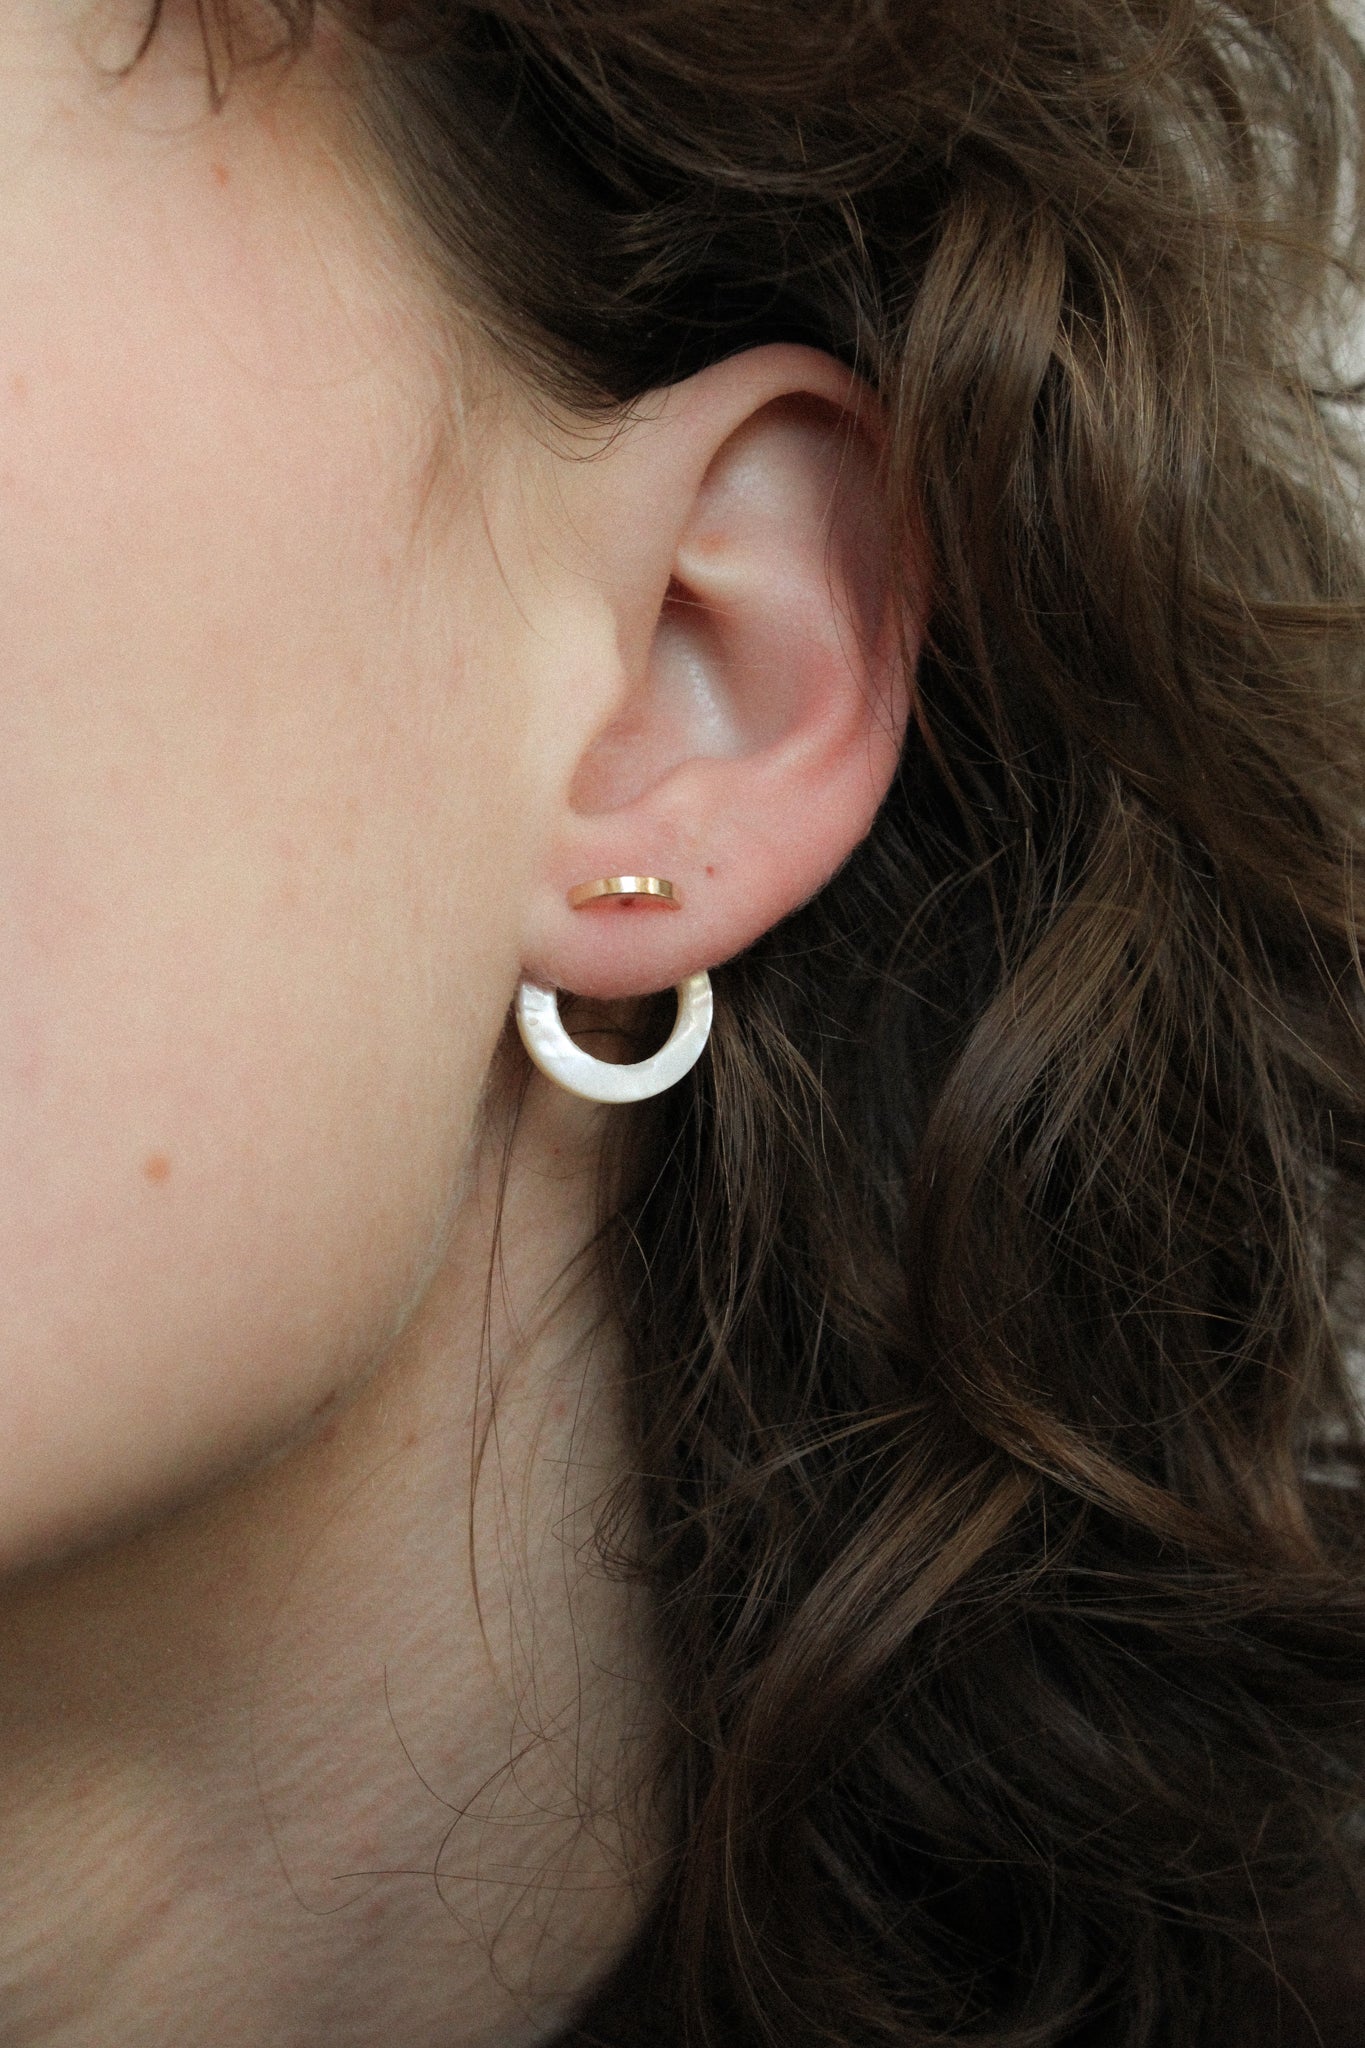 Nacre Link Earrings